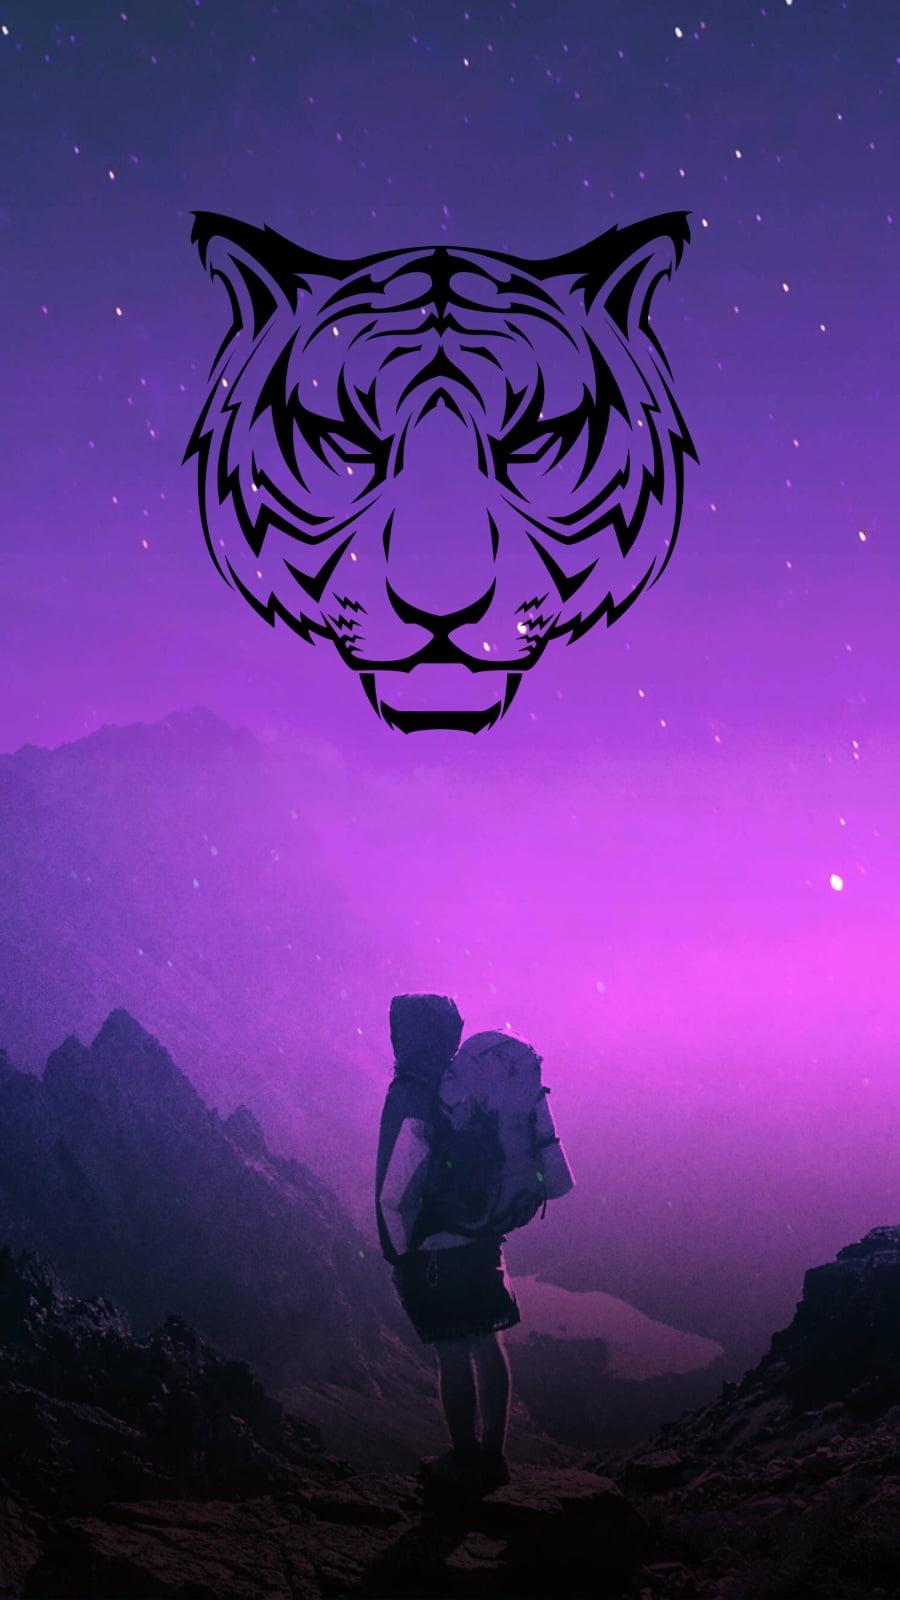 tiger's face wallpaper, logo, graphic design, space